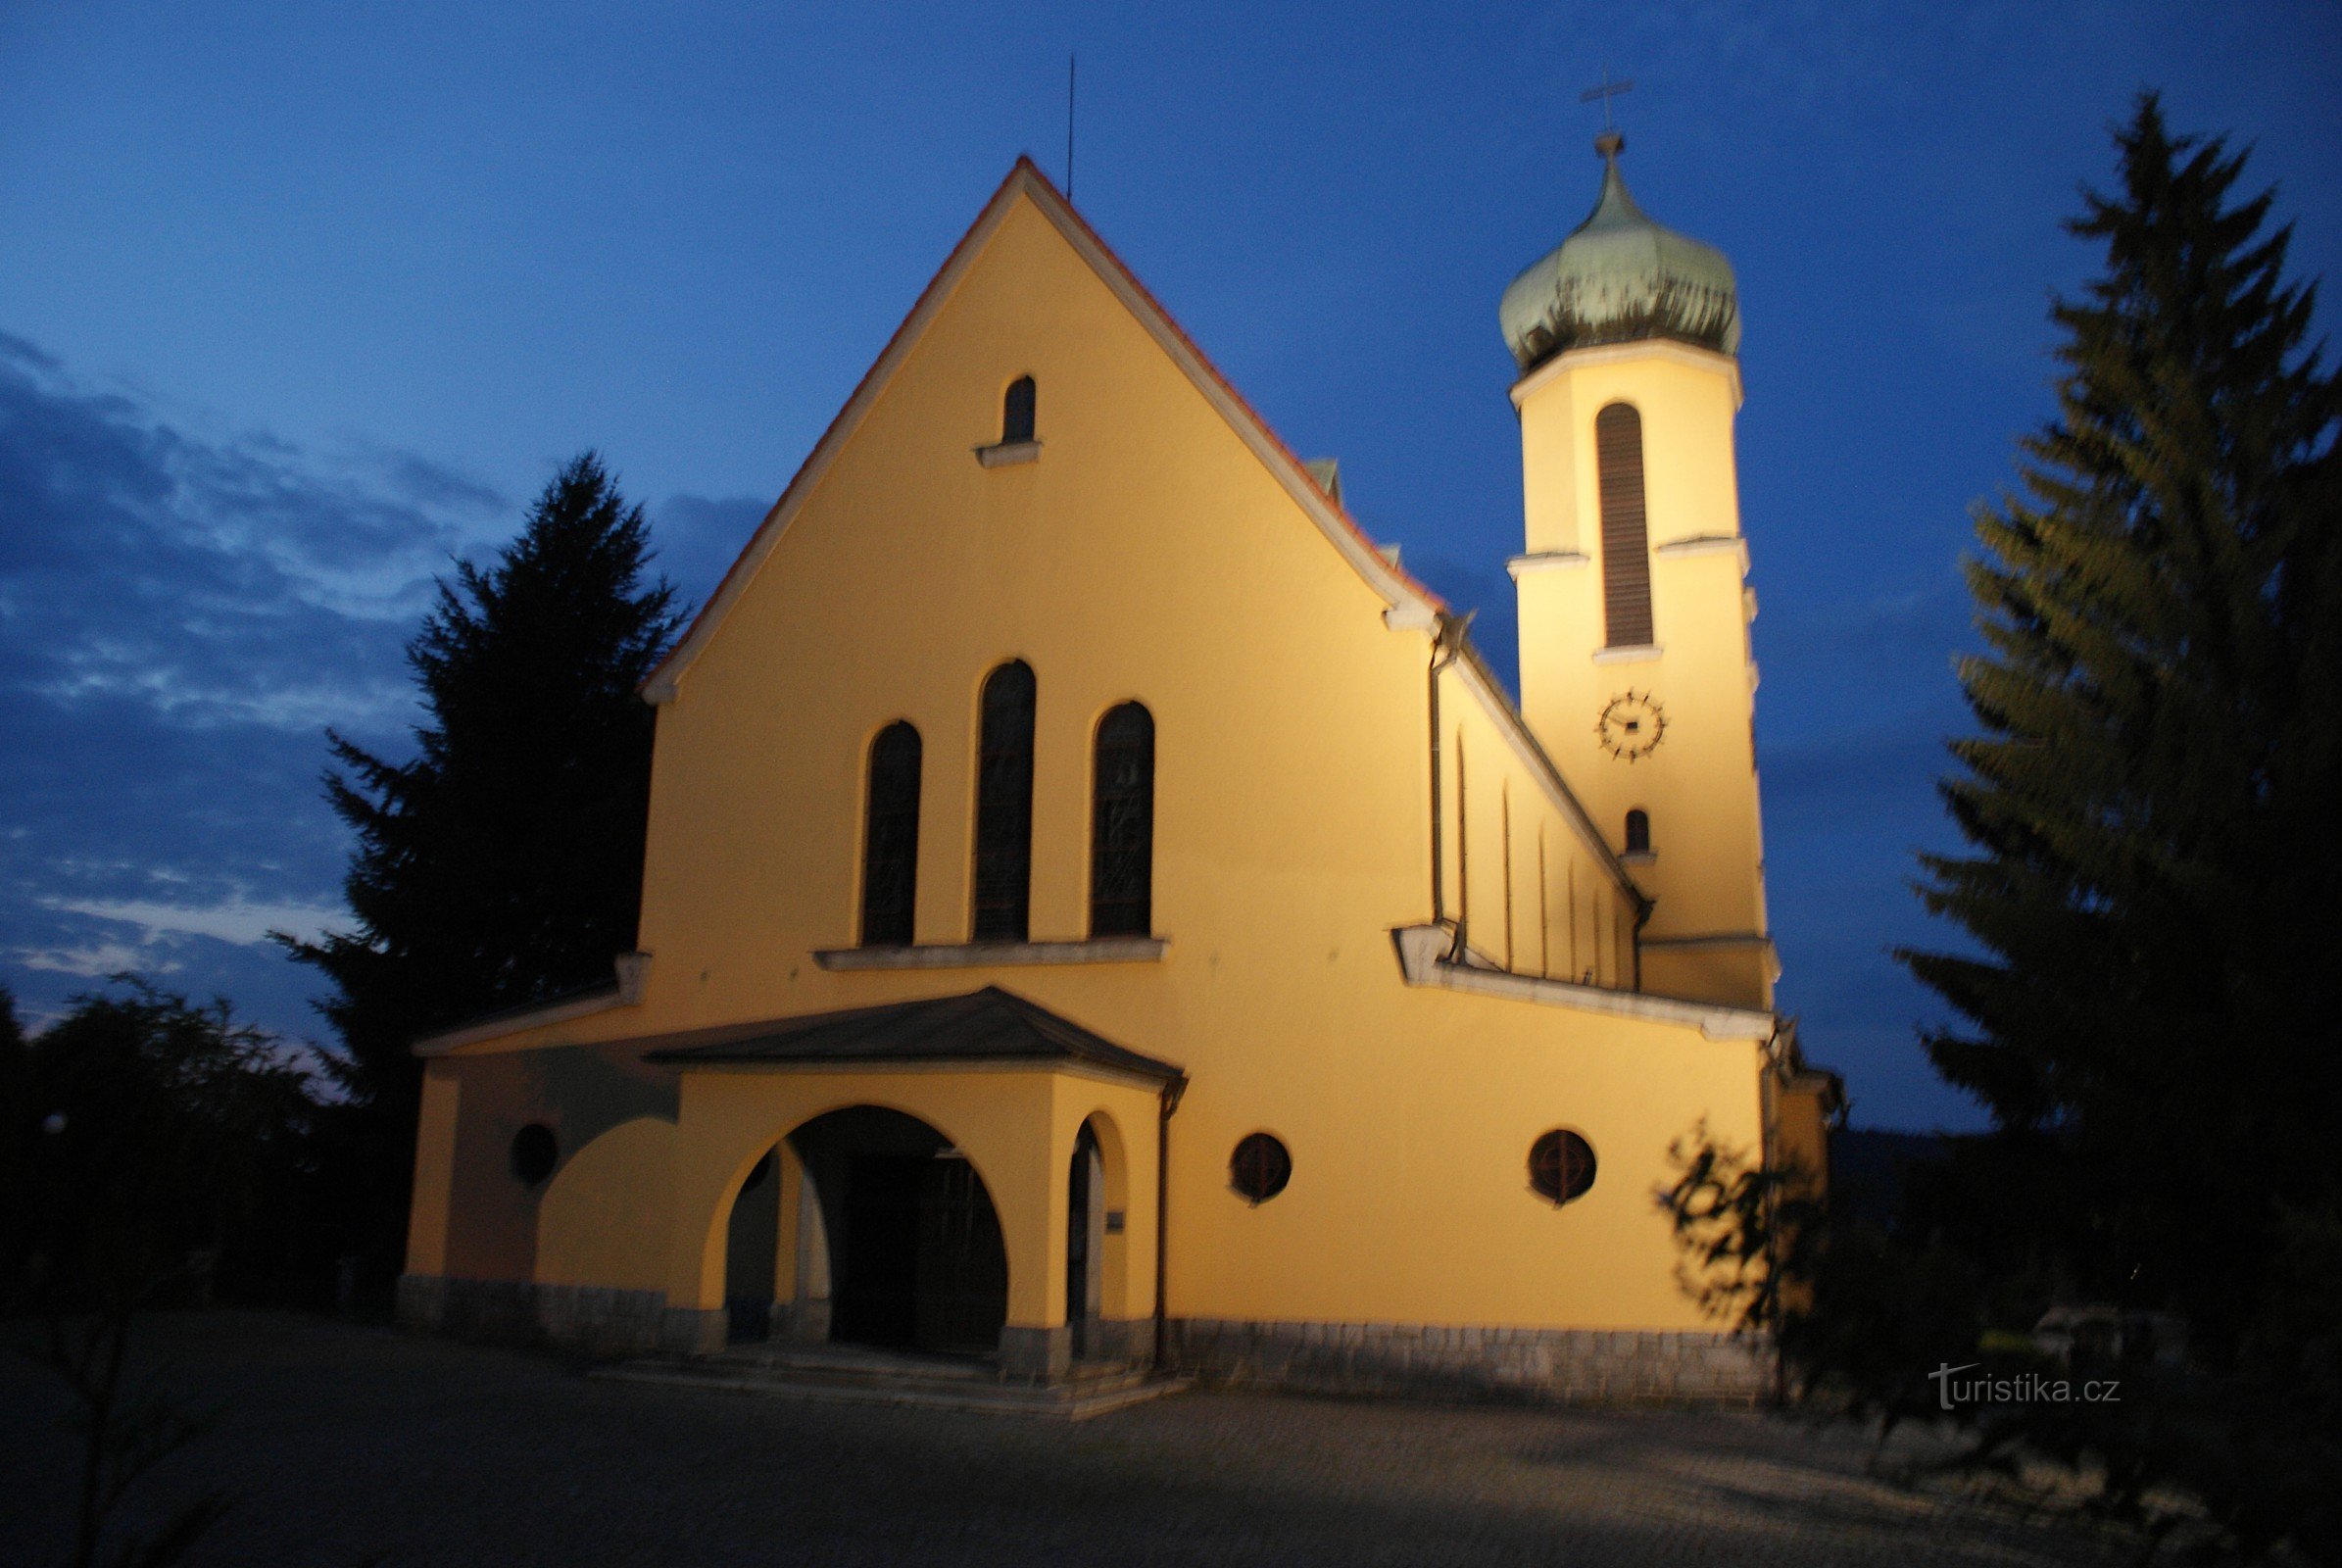 Vétrní - chiesa di S. Jan Nepomucký